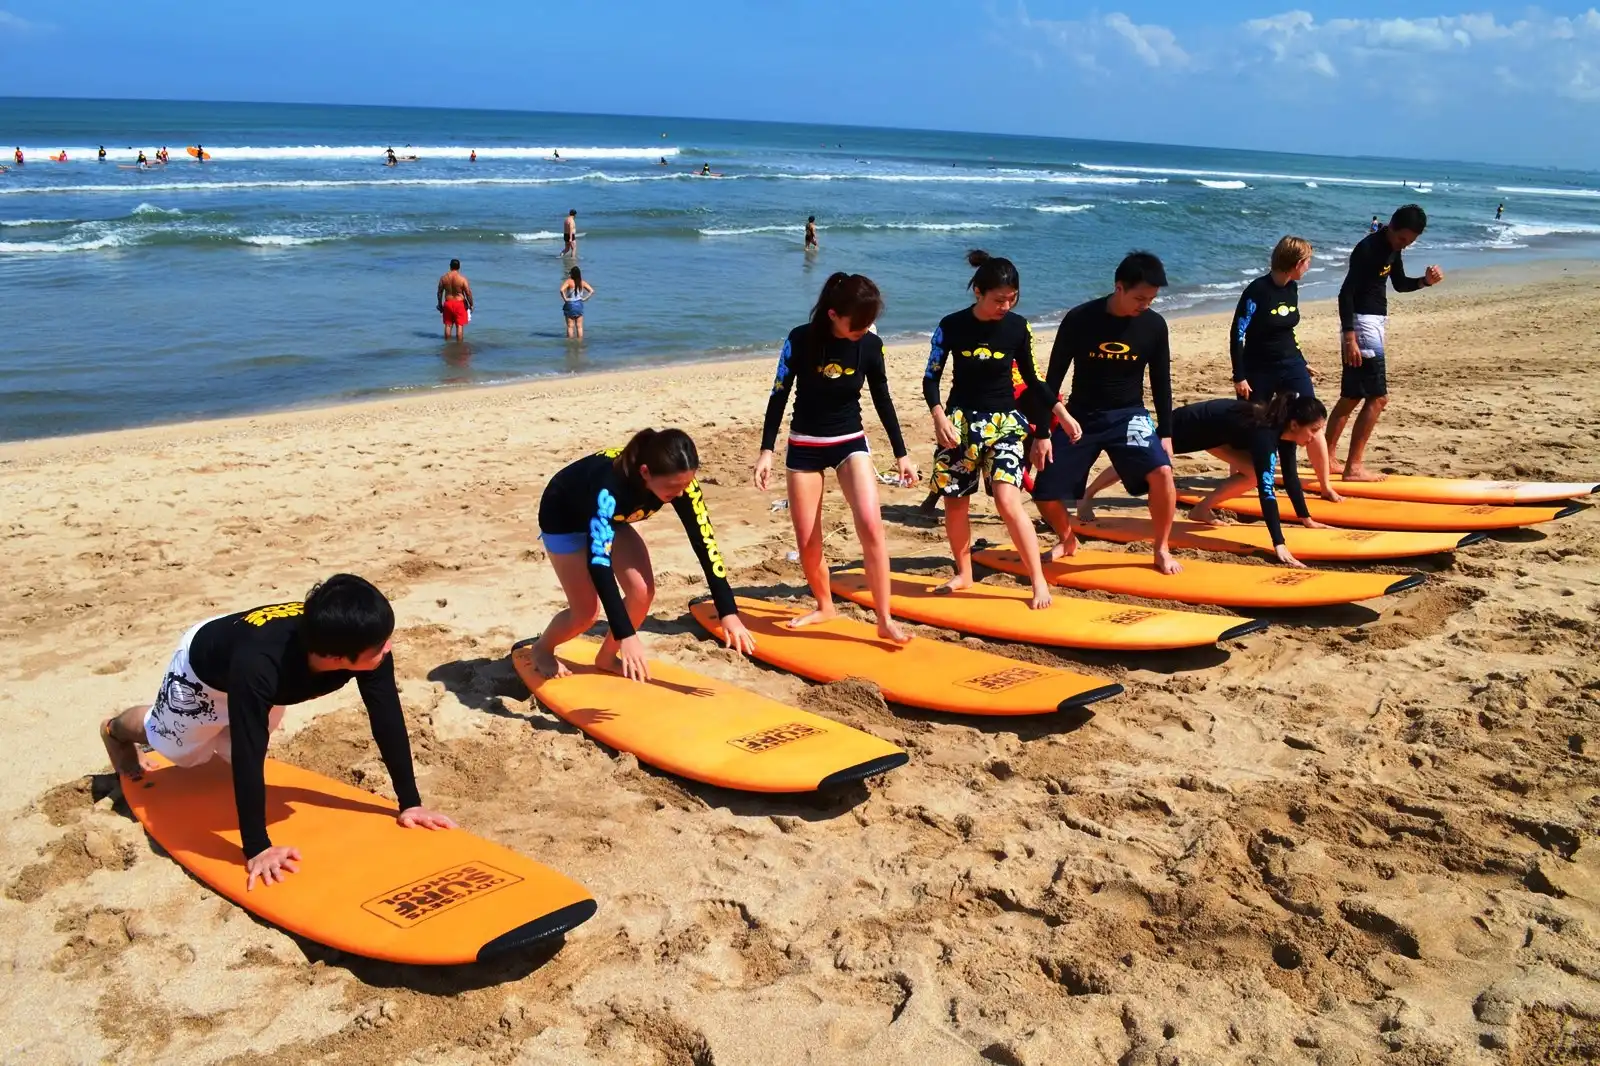 Surfing in Bali